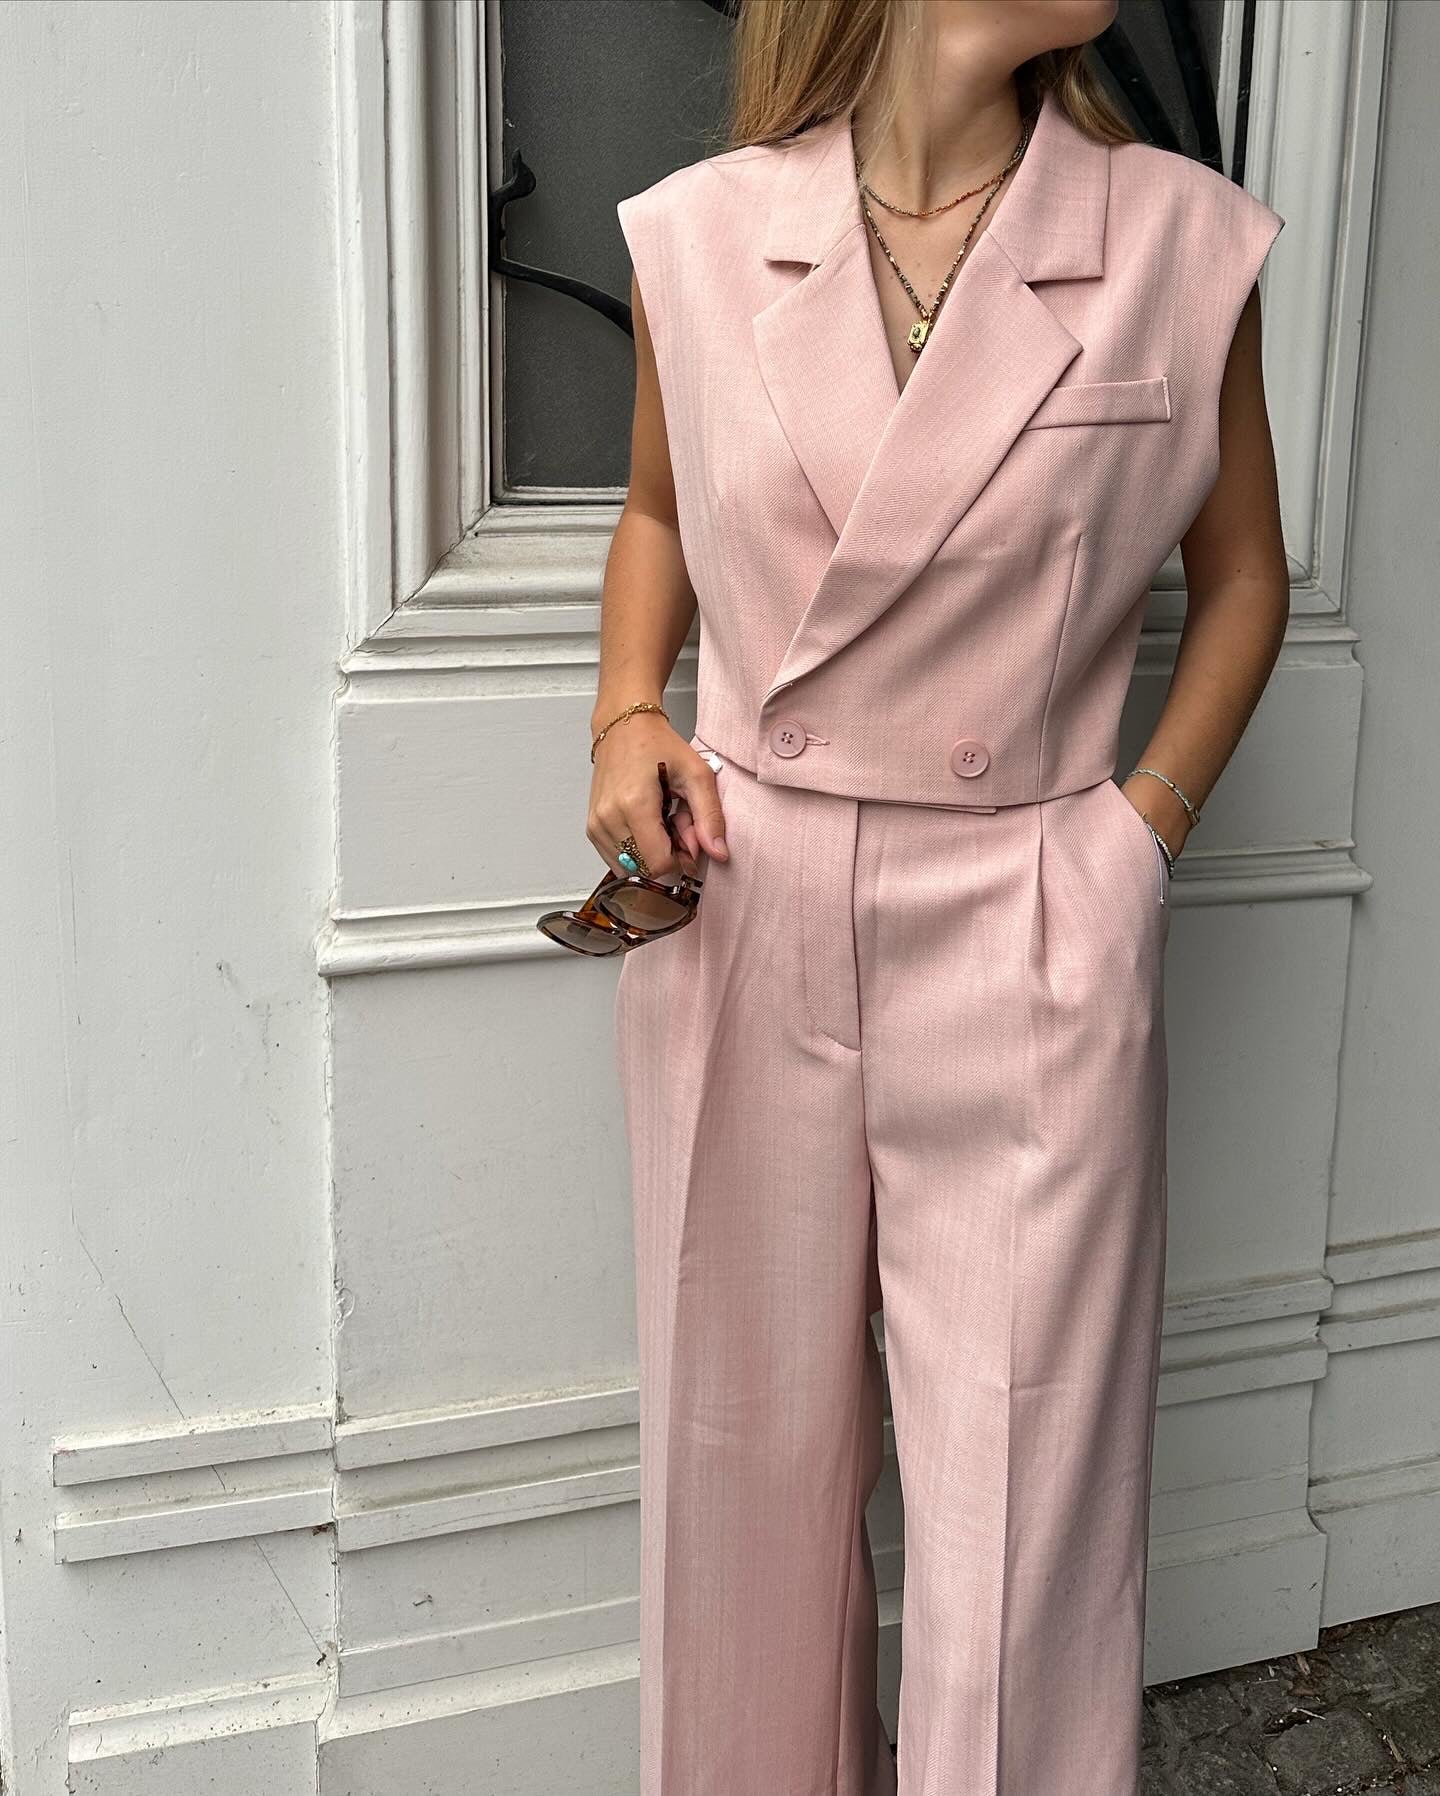 Pink vintage suit